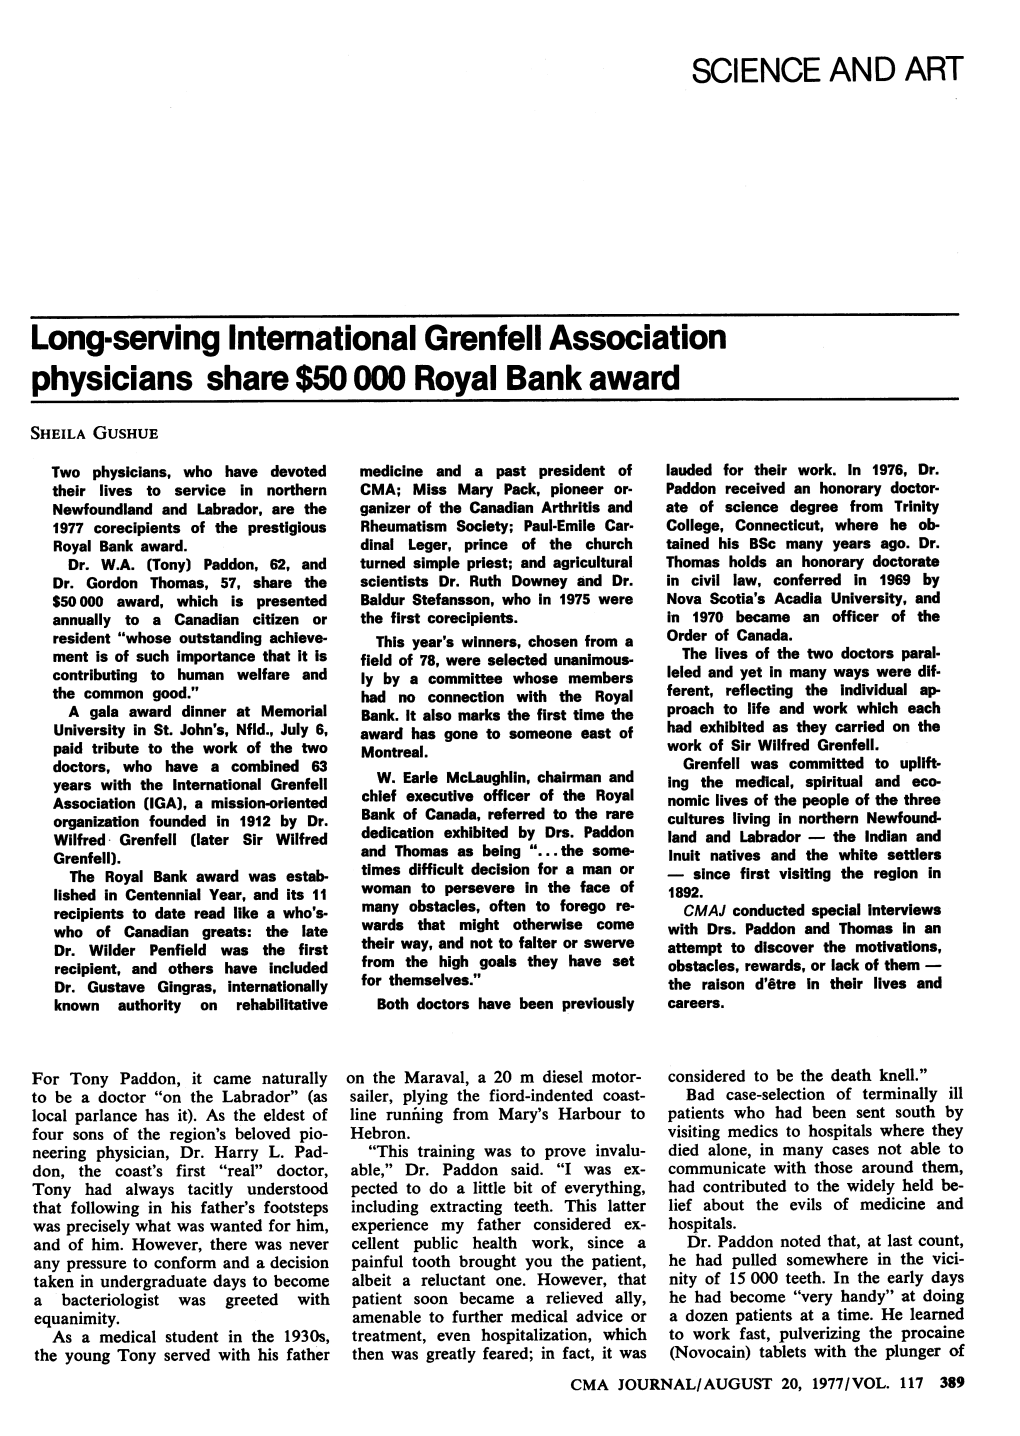 Long*Serving International Grenfell Association Physicians Share $50 000 Royal Bank Award